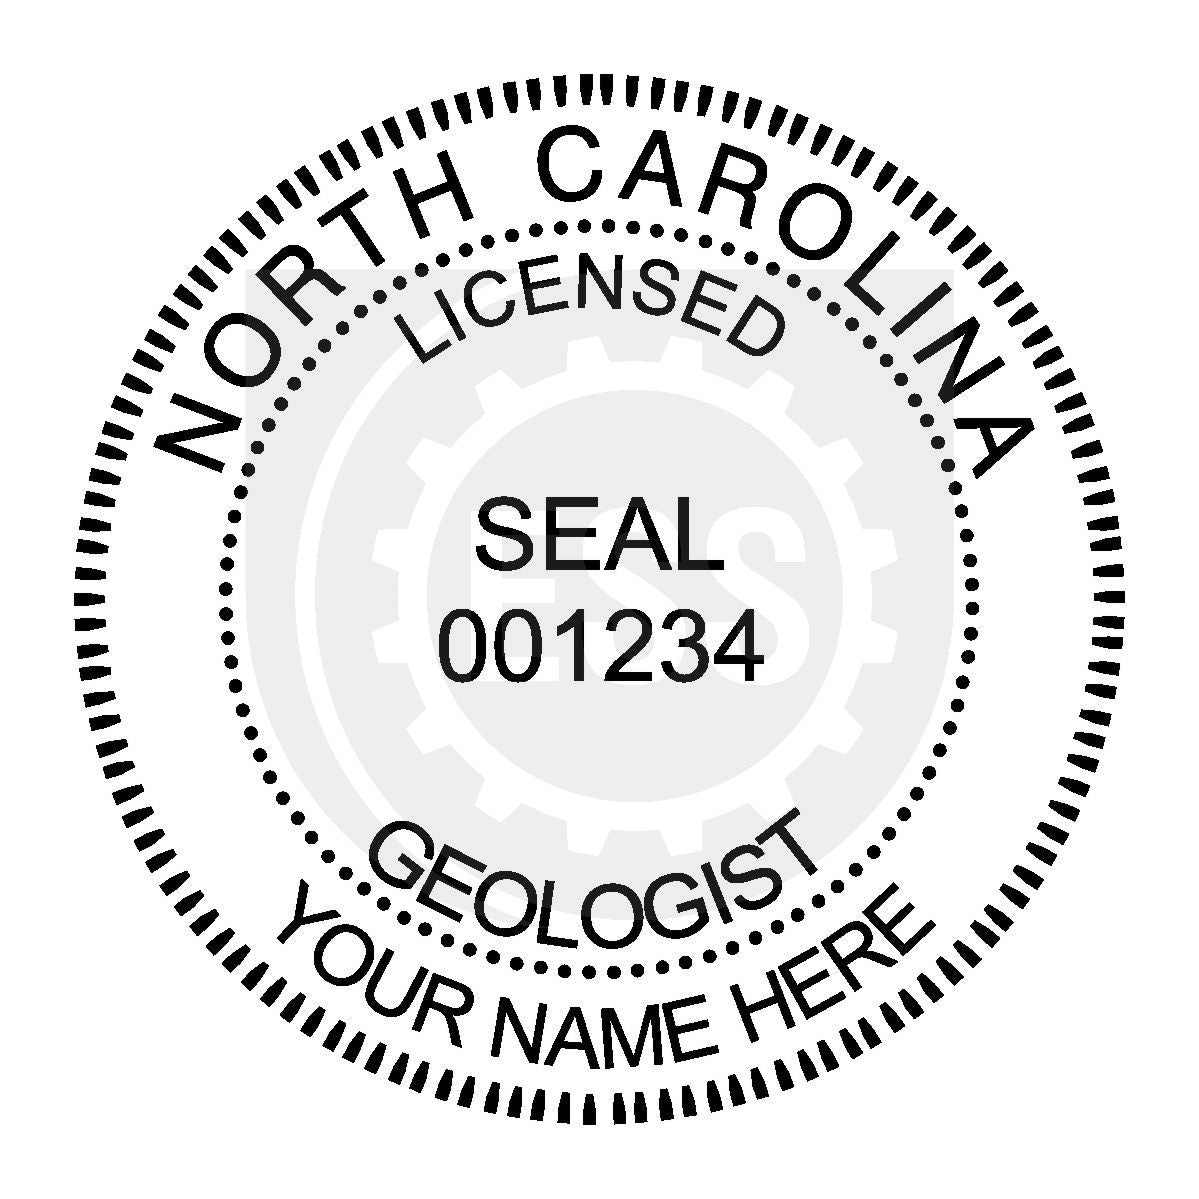 North Carolina Geologist Seal Setup